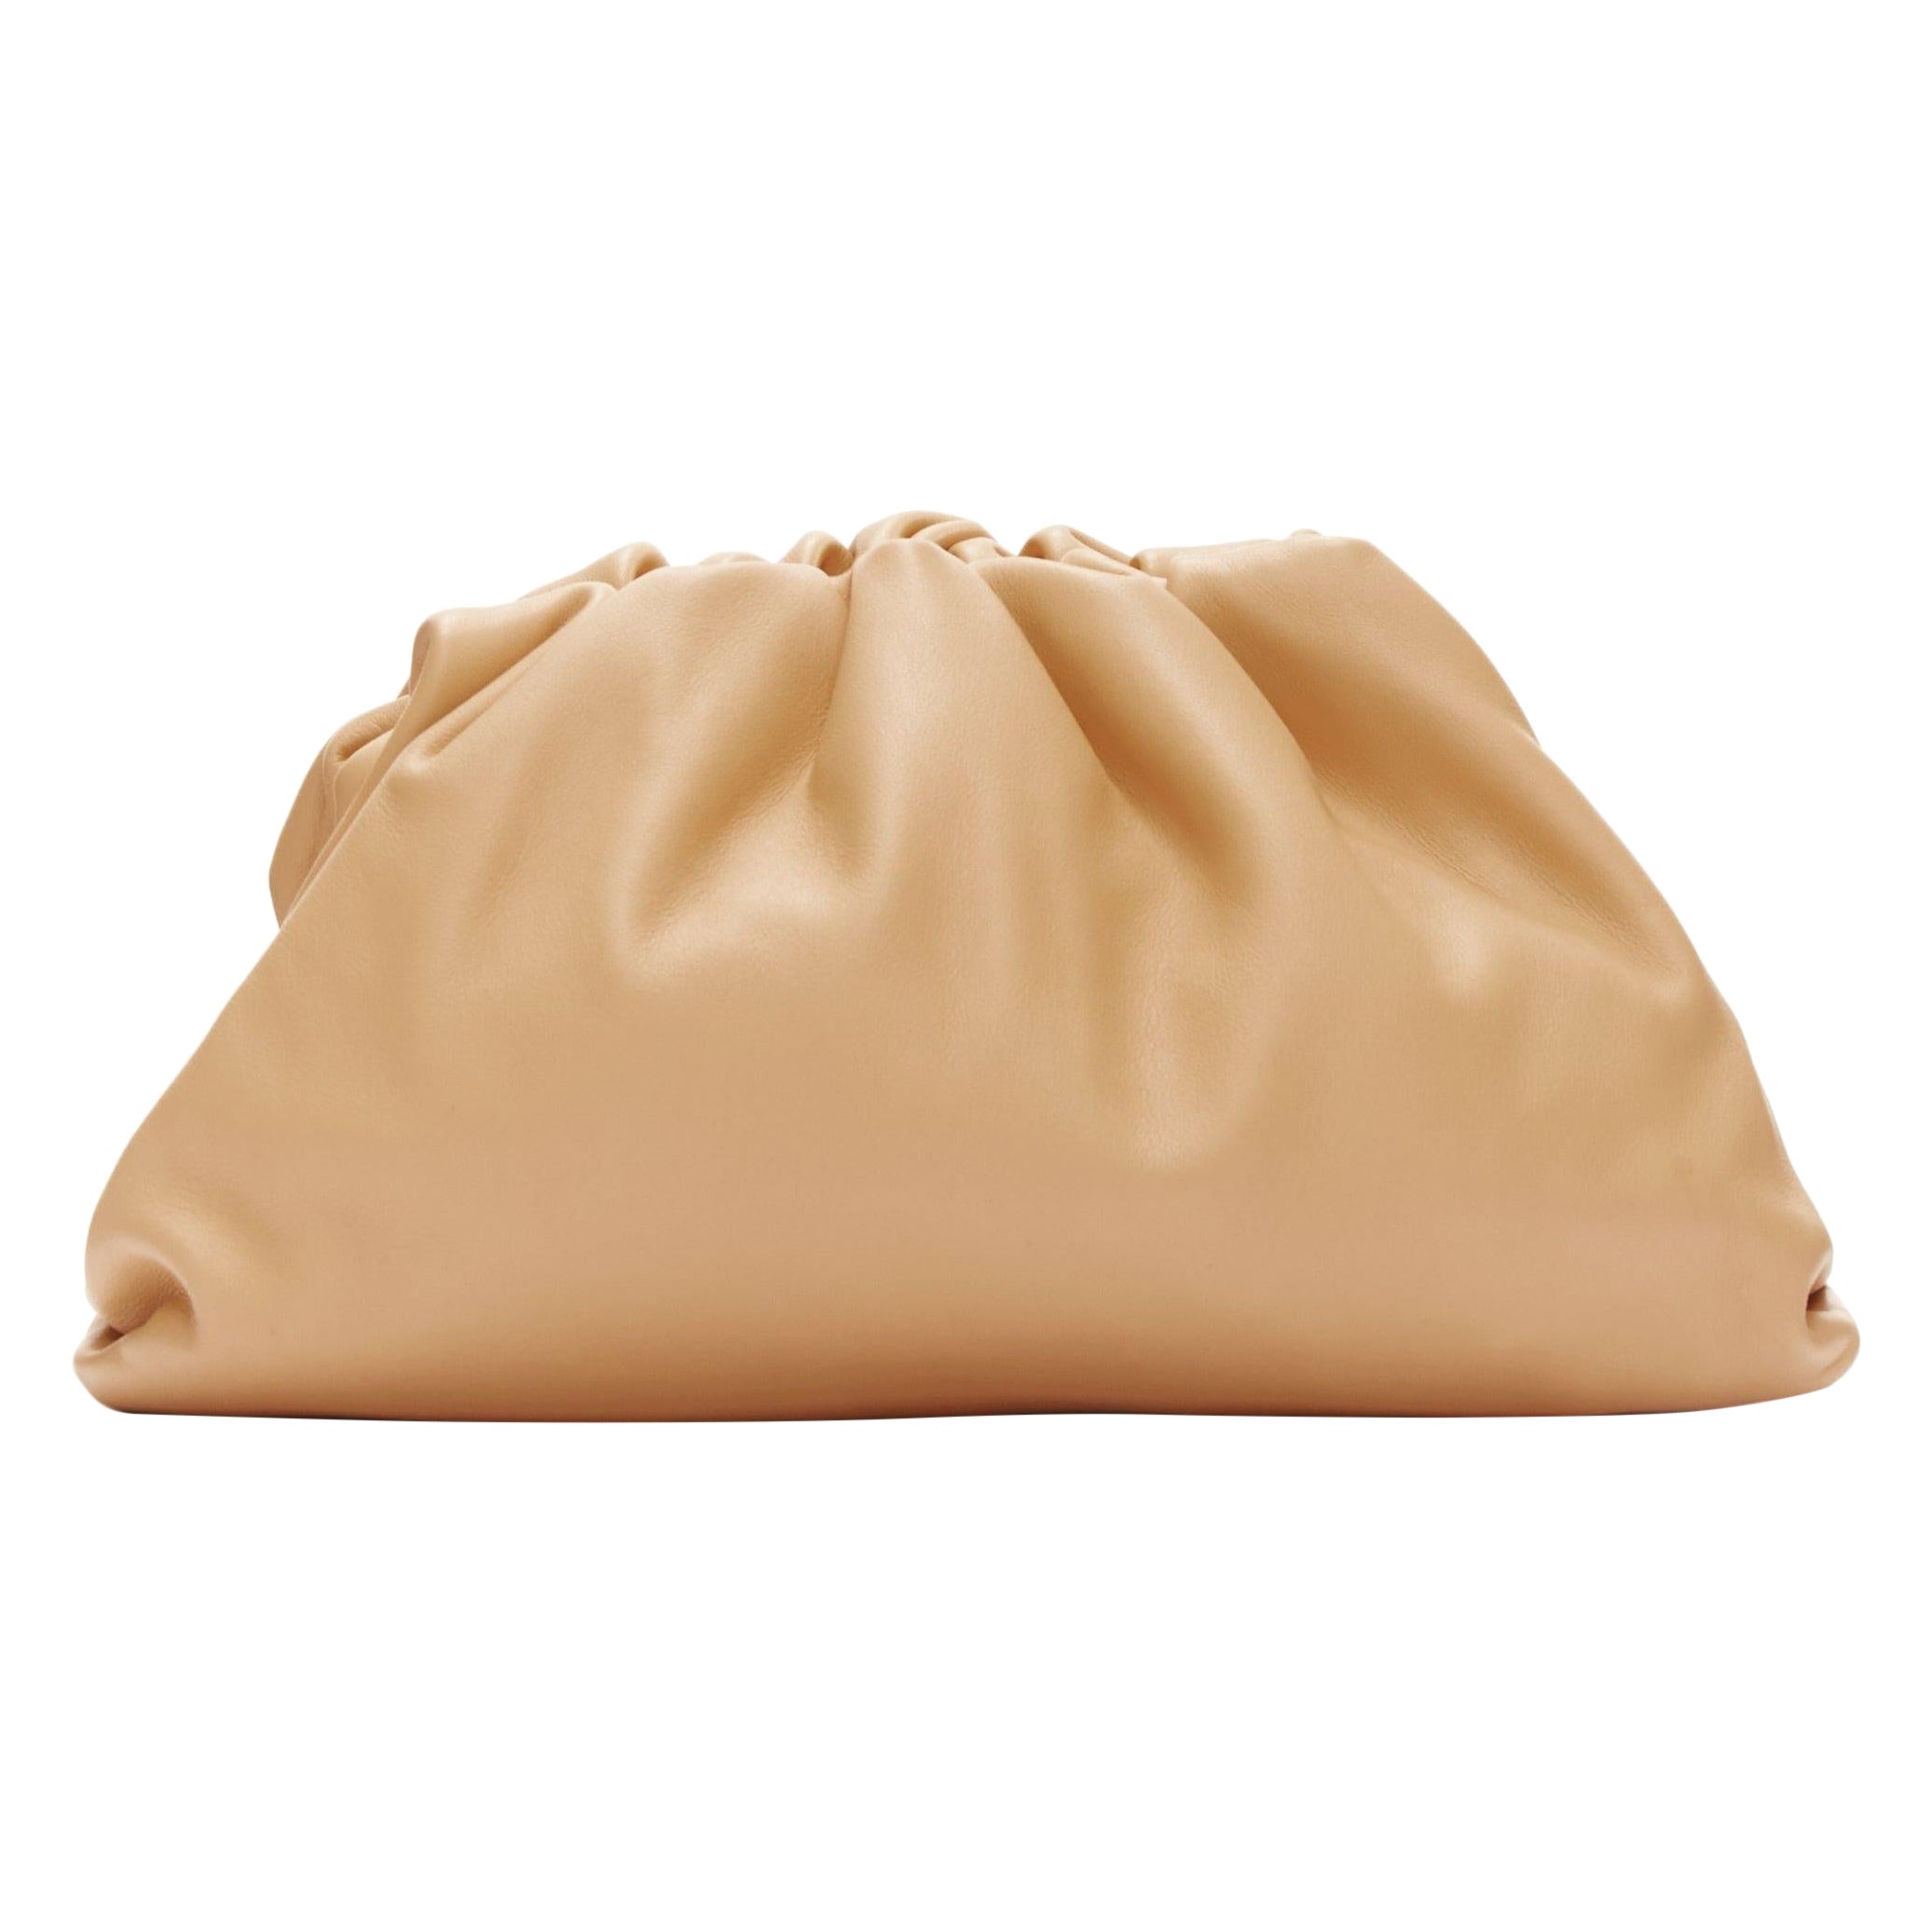 BOTTEGA VENETA The Pouch Small tan brown leather dumpling clutch bag For Sale